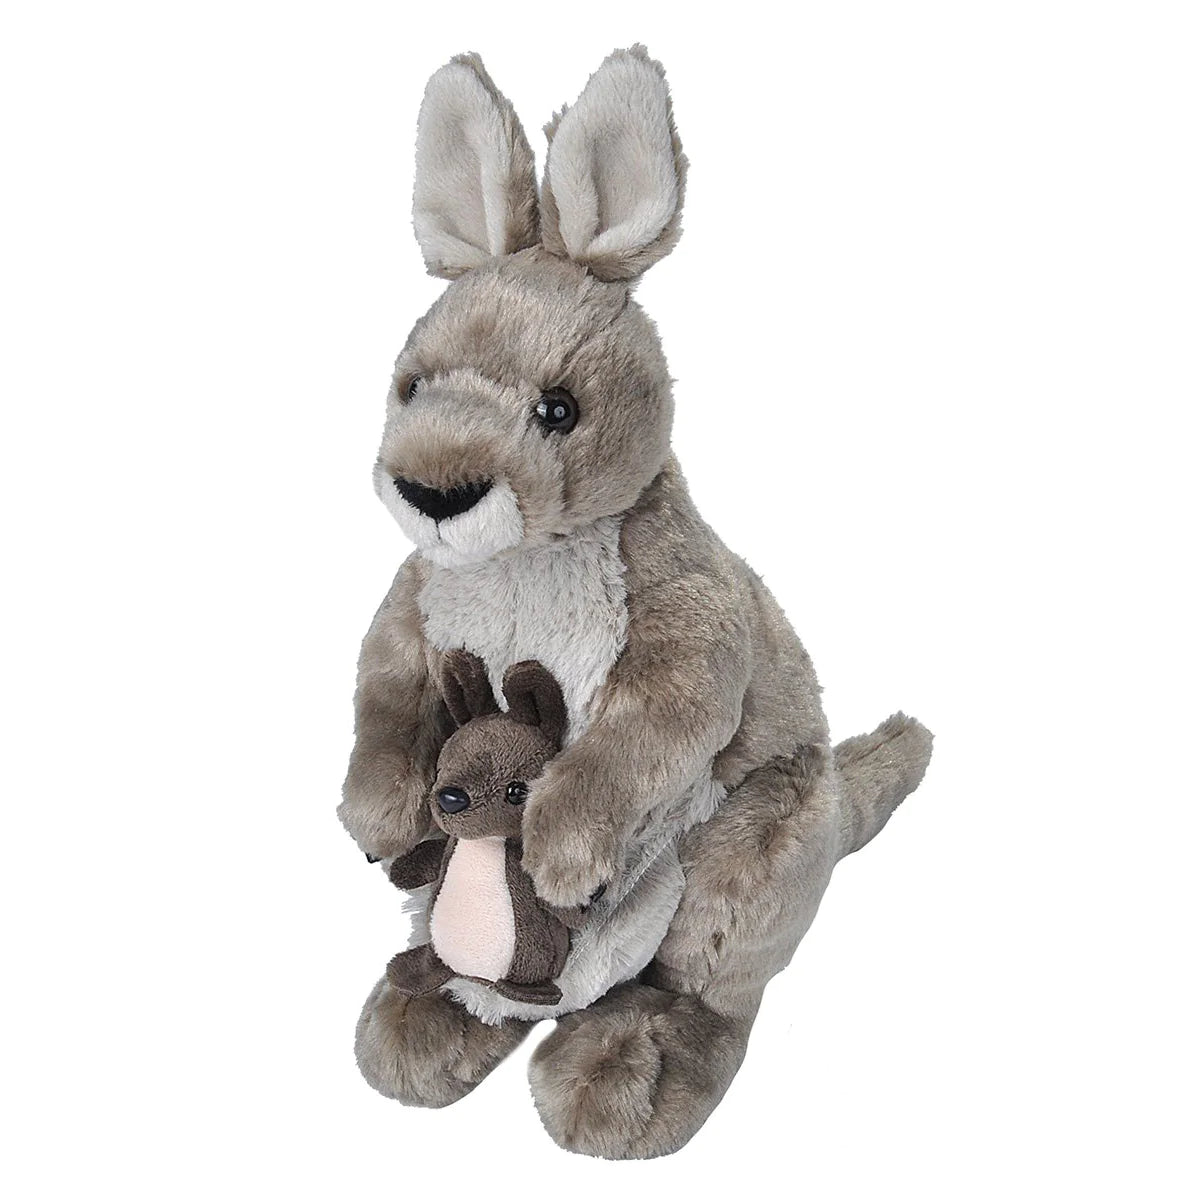 a stuffed kangaroo is holding a baby kangaroo